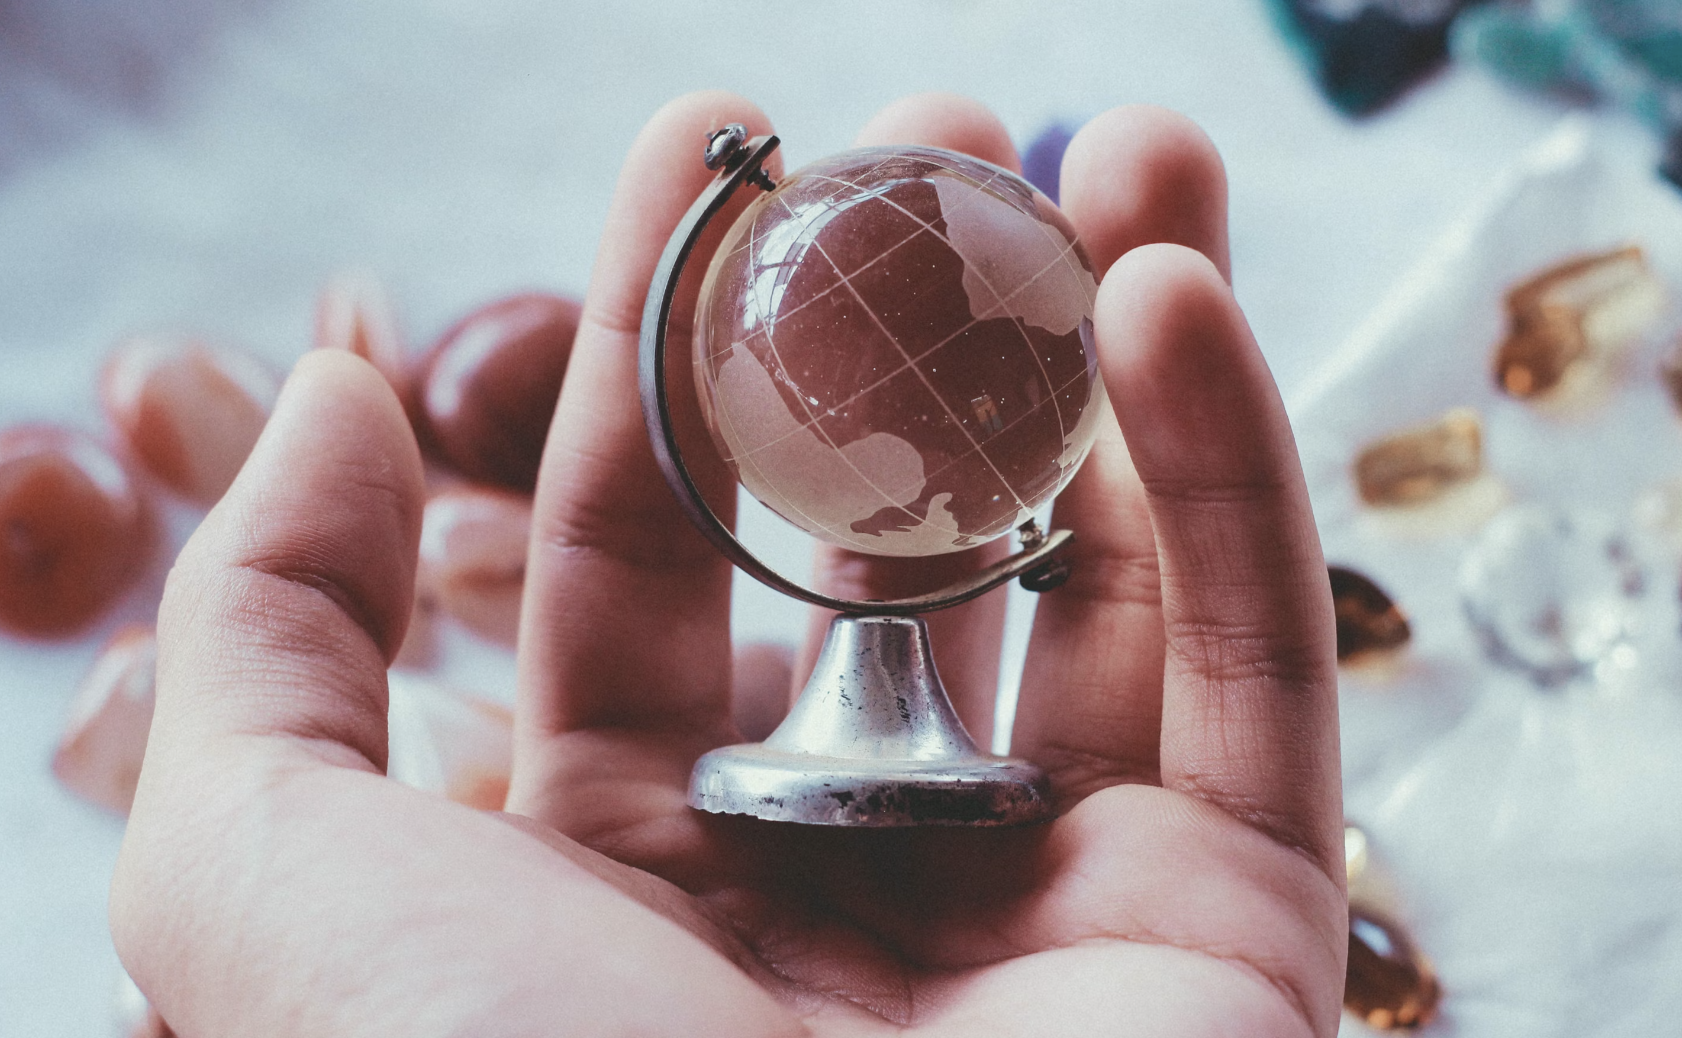 Globe in hand